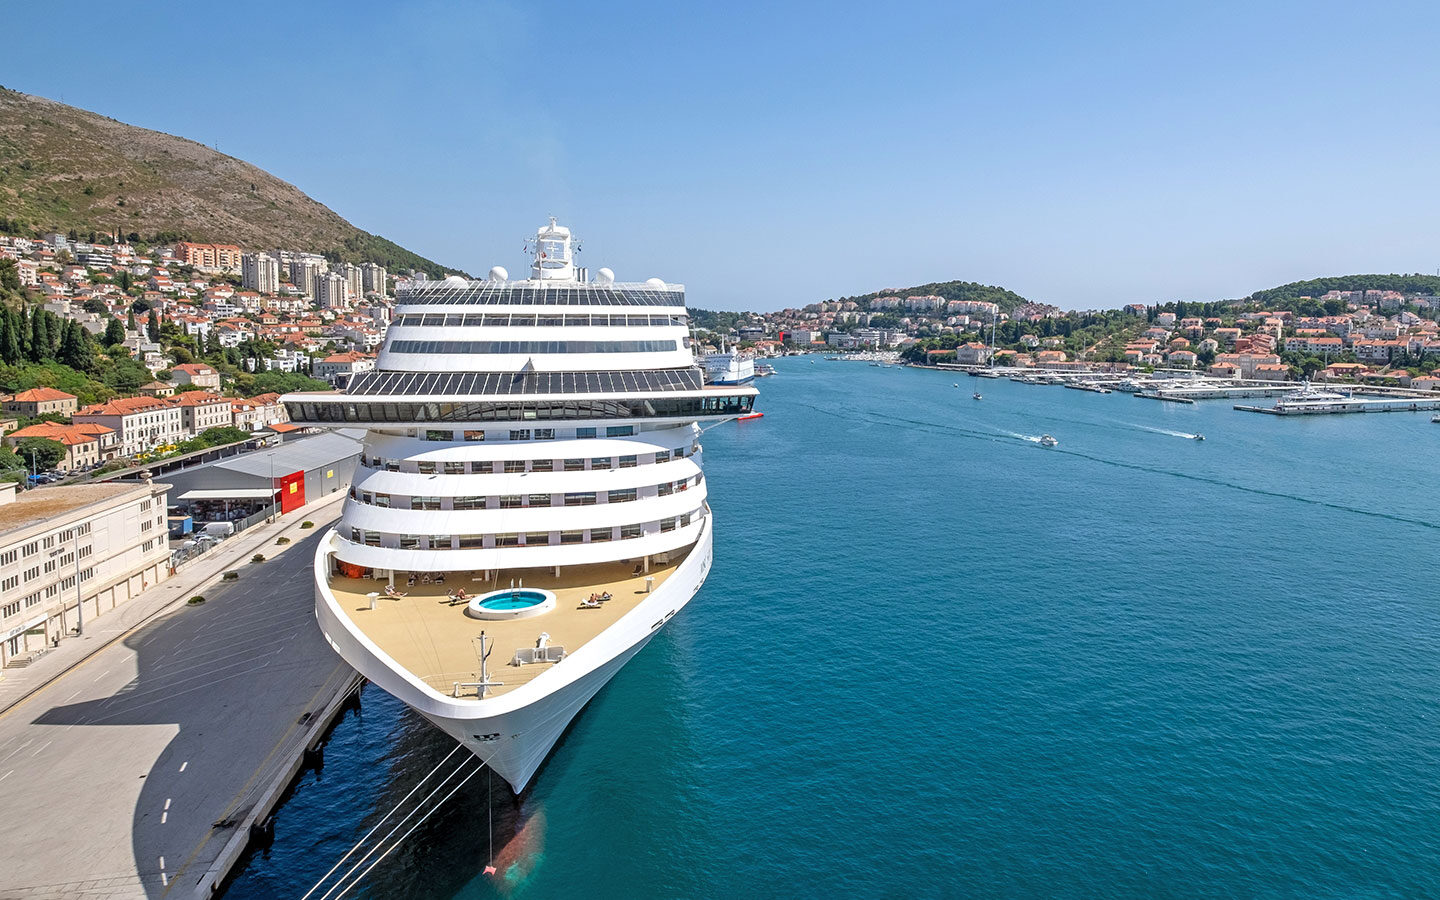 Cruise ship dock in Dubrovnik harbour